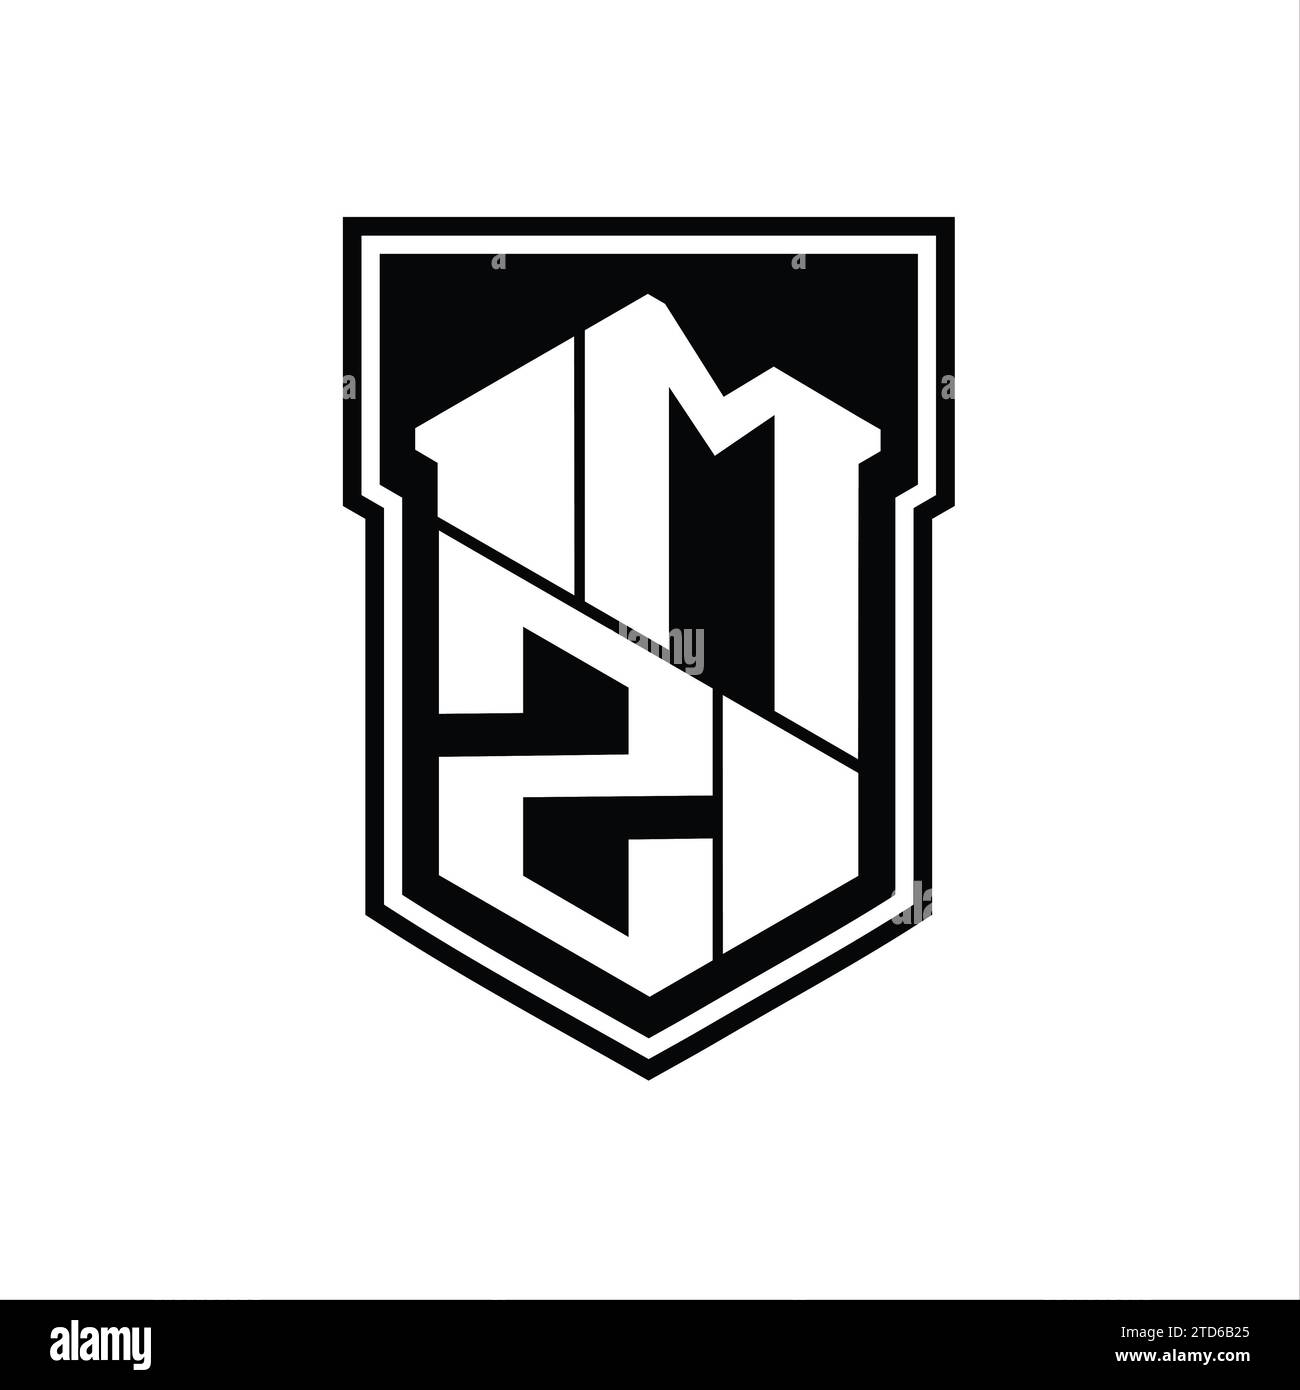 Mz logo monogram emblem style with crown shape Vector Image